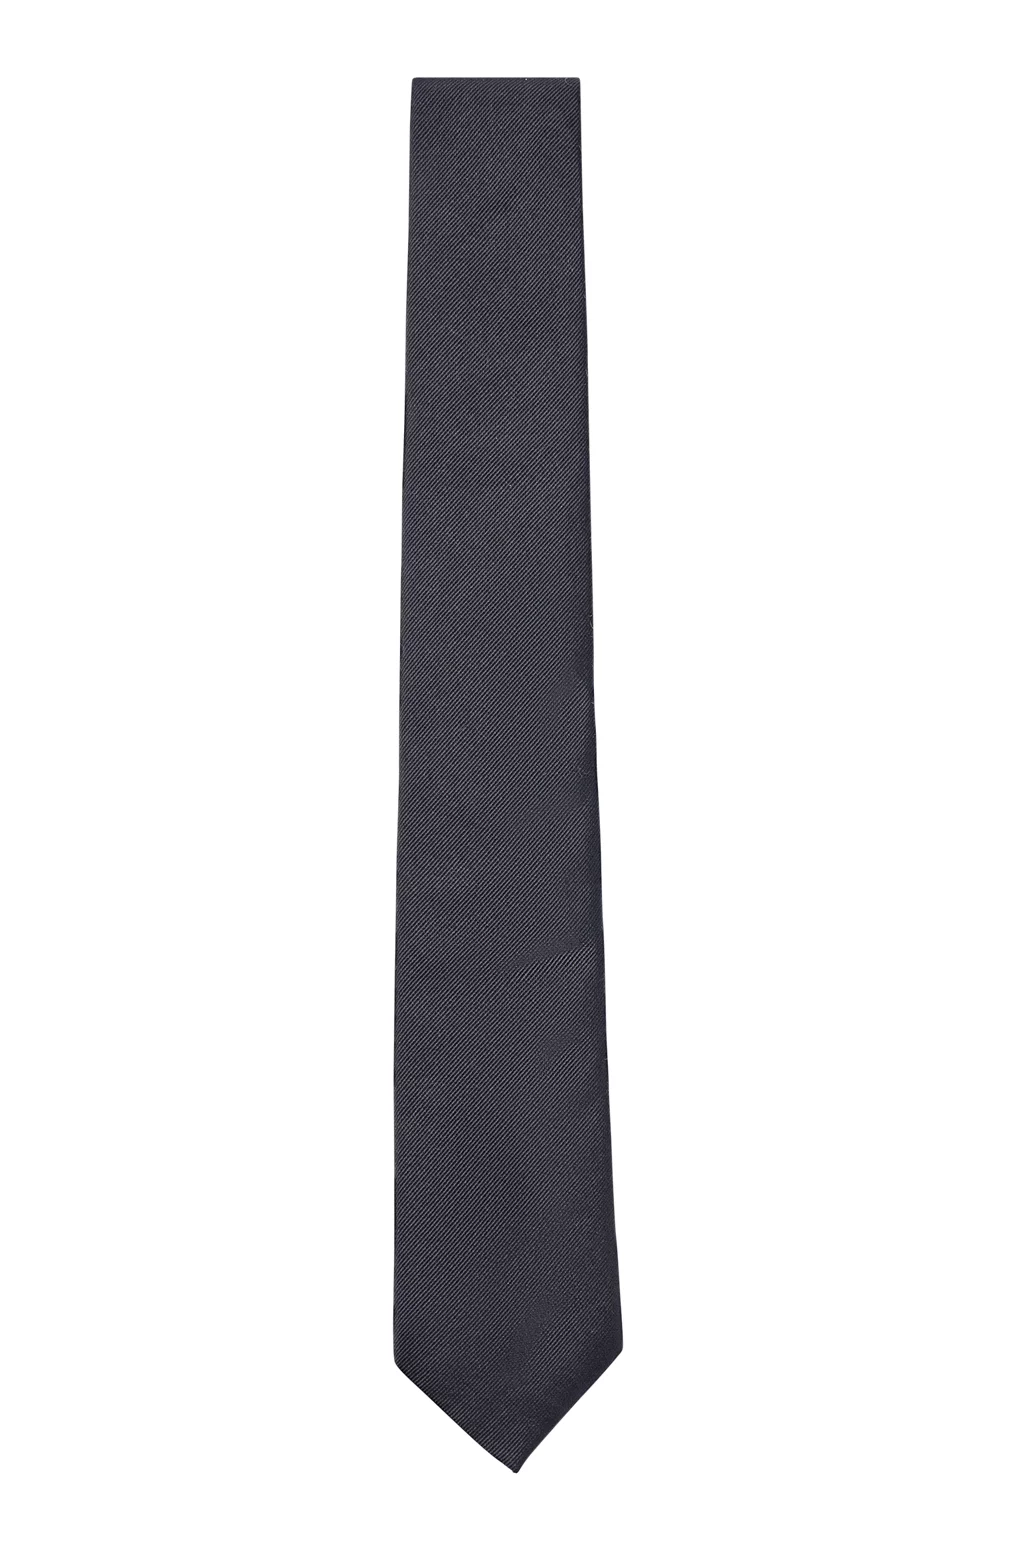 Hugo Boss 7.5cm Black Silk Jacquard Formal Tie